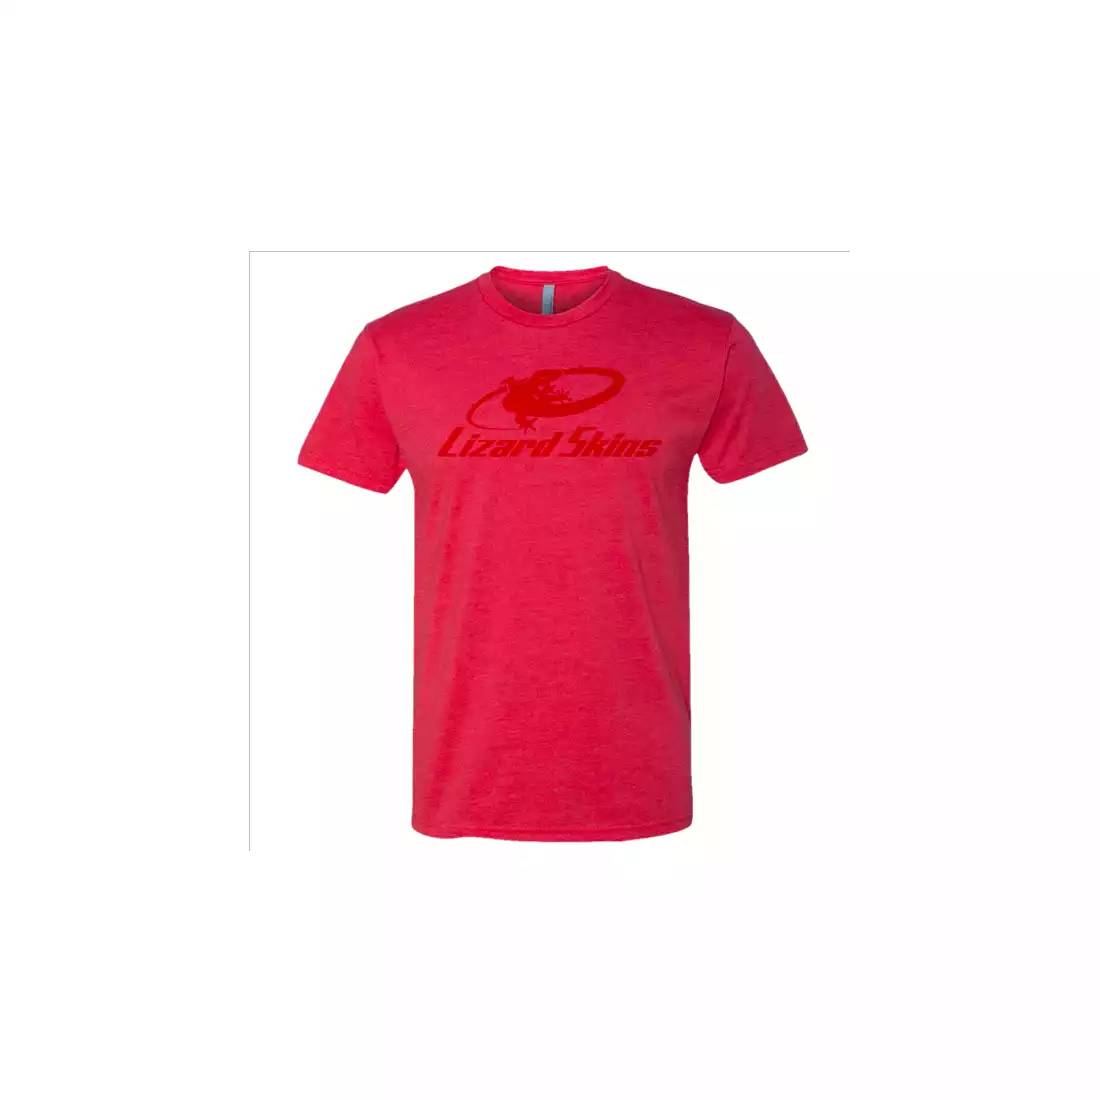 LIZARD SKINS SUBTLE LOGO classic t-shirt red